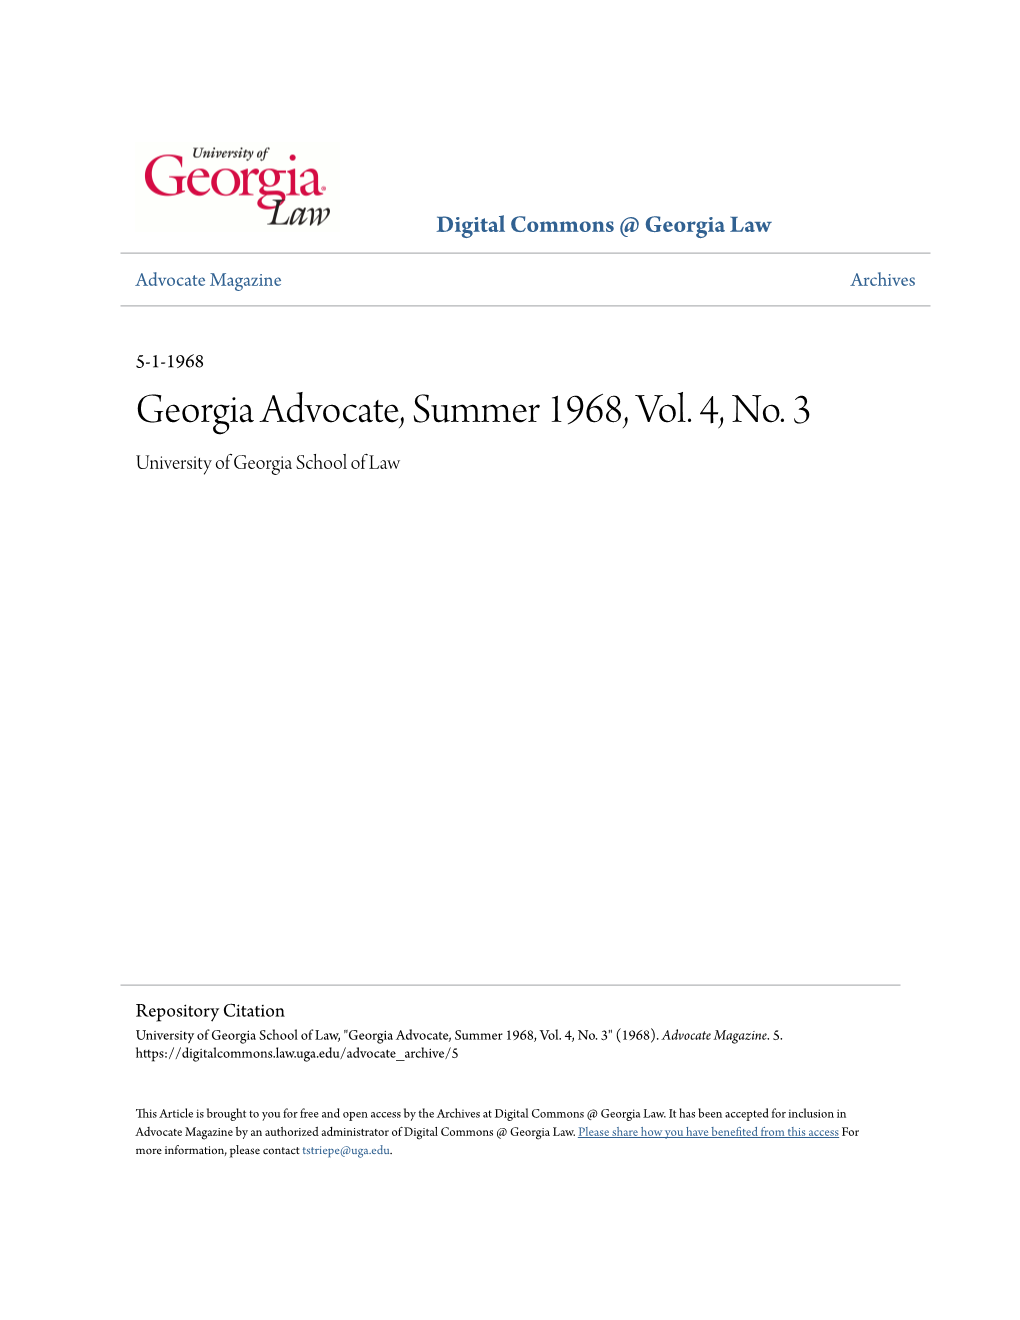 Georgia Advocate, Summer 1968, Vol. 4, No. 3 University of Georgia School of Law